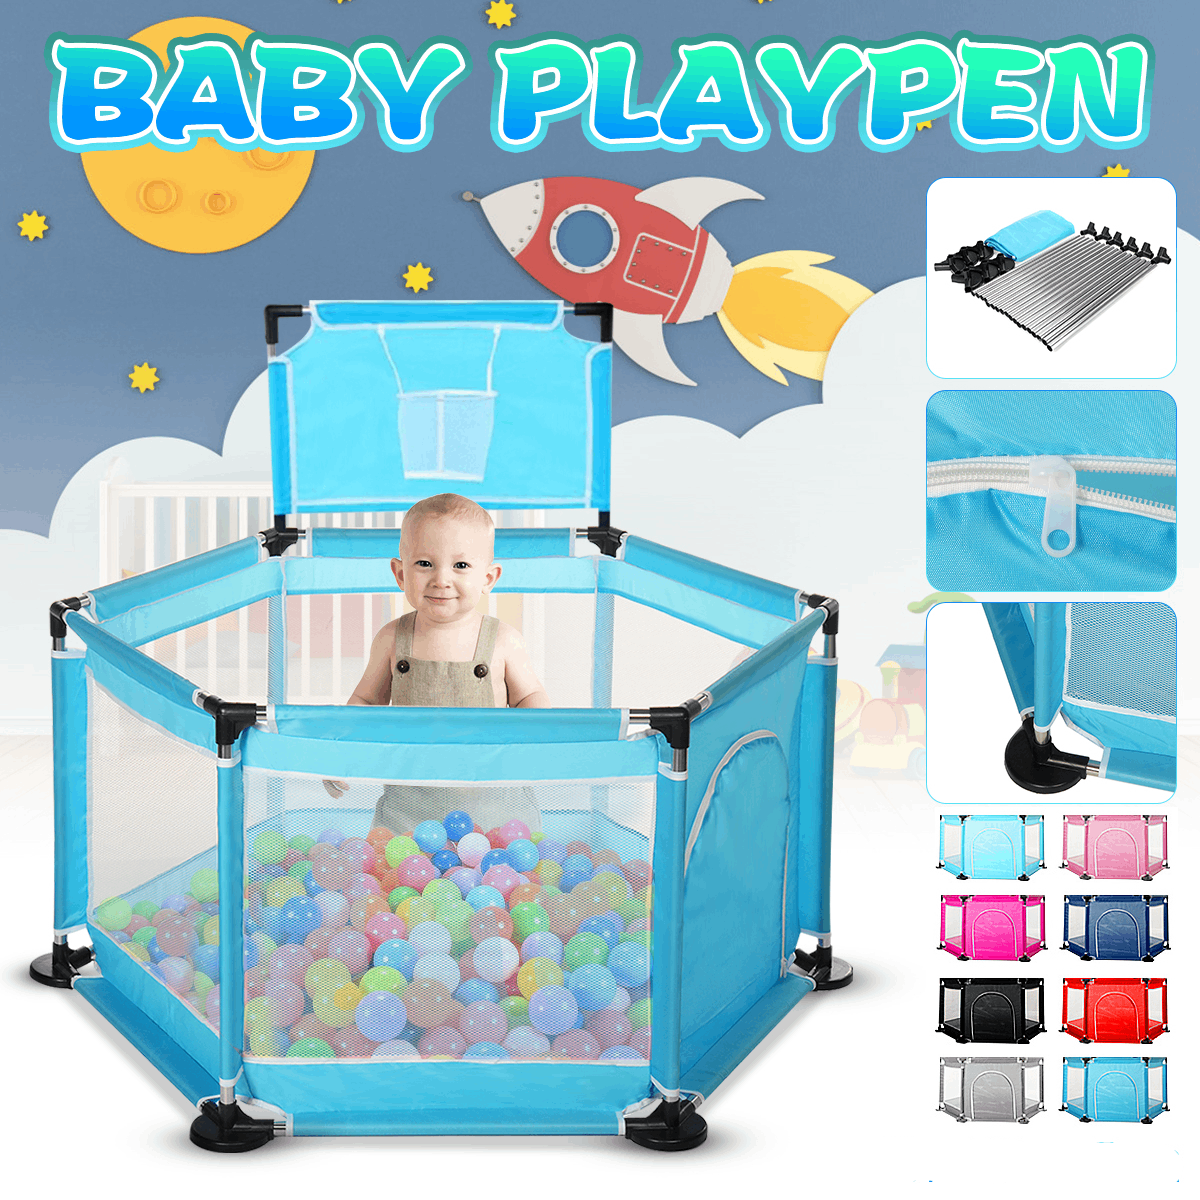 Baby-Playpen-Interactive-Kids-Play-Playpen-Ocean-Balls-Games-Safety-Gate-Baby-Toddler-Fence-1941468-1